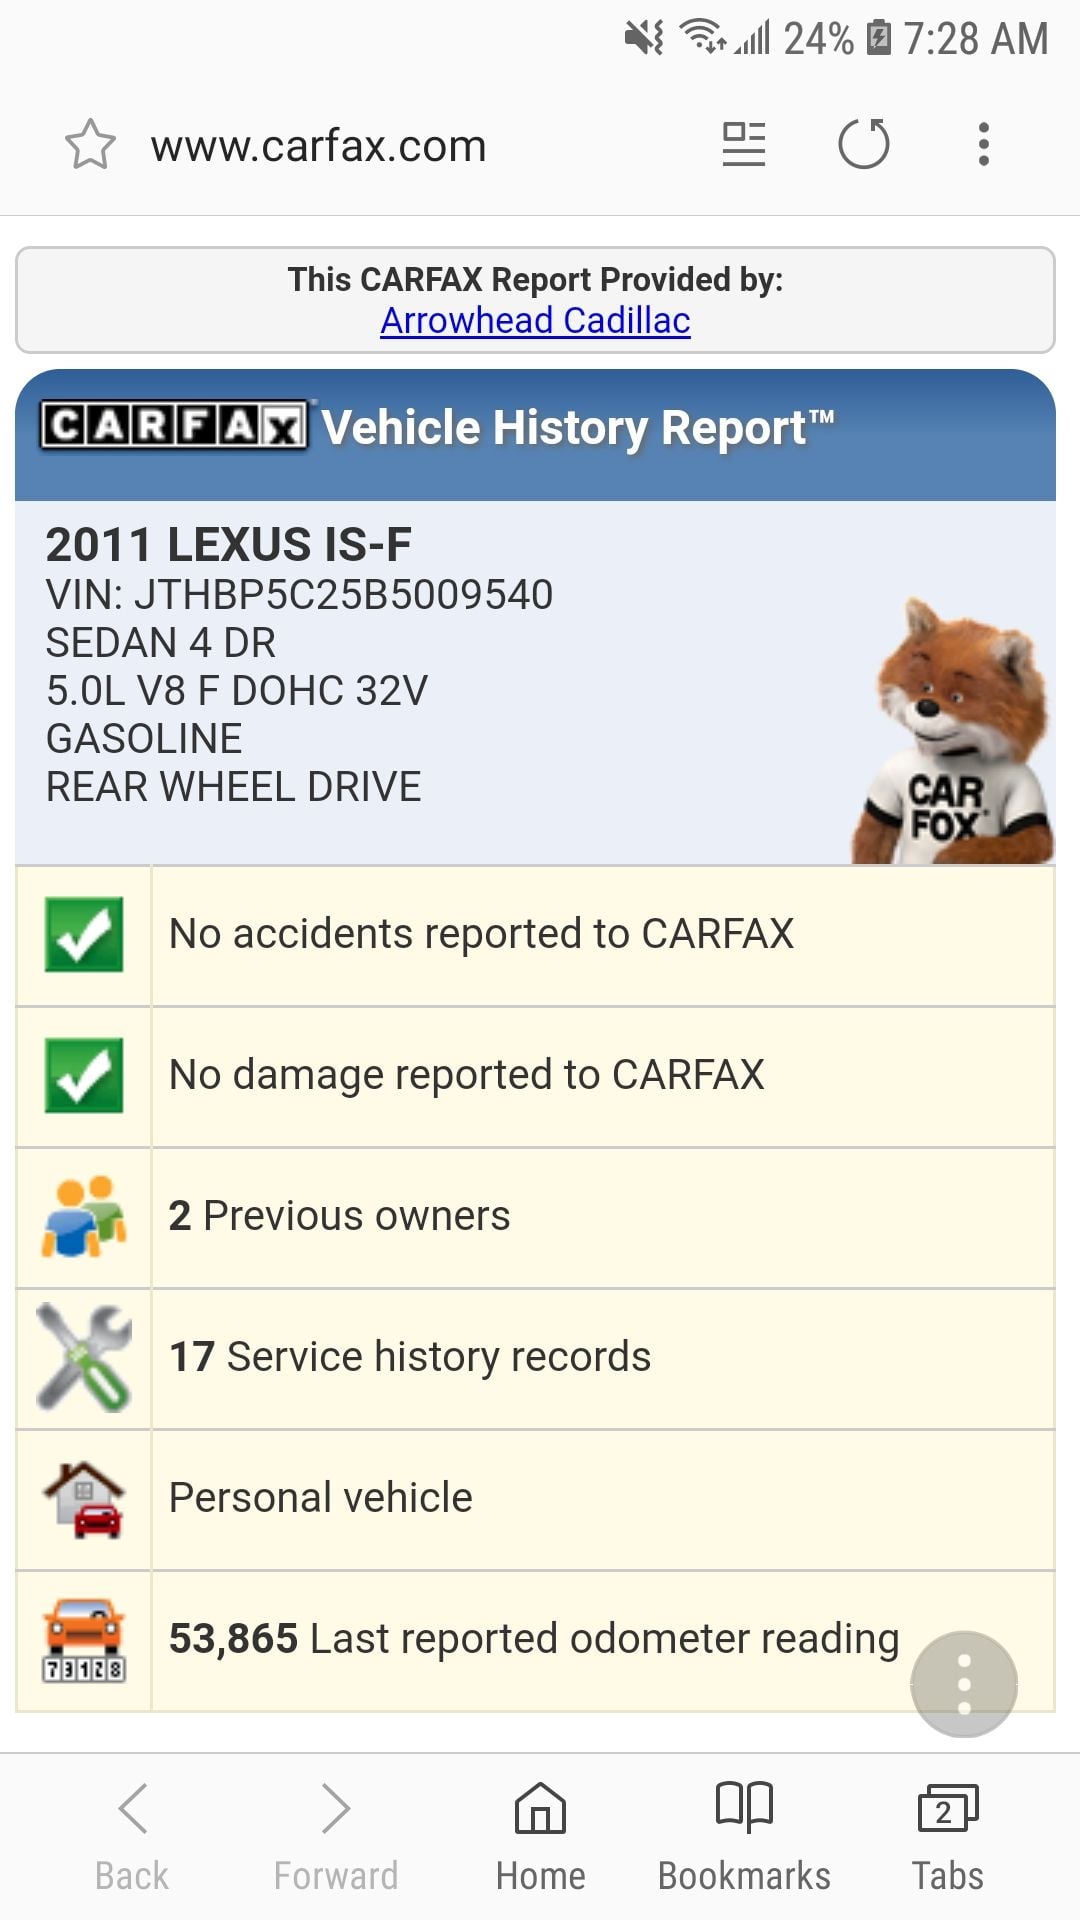 2011 Lexus IS F - AZ 2011 IS F 54k miles. Silver and black interior - Used - VIN JTHBP5C25B5009540 - 55,330 Miles - 8 cyl - 2WD - Automatic - Sedan - Silver - Phoenix, AZ AZ, United States